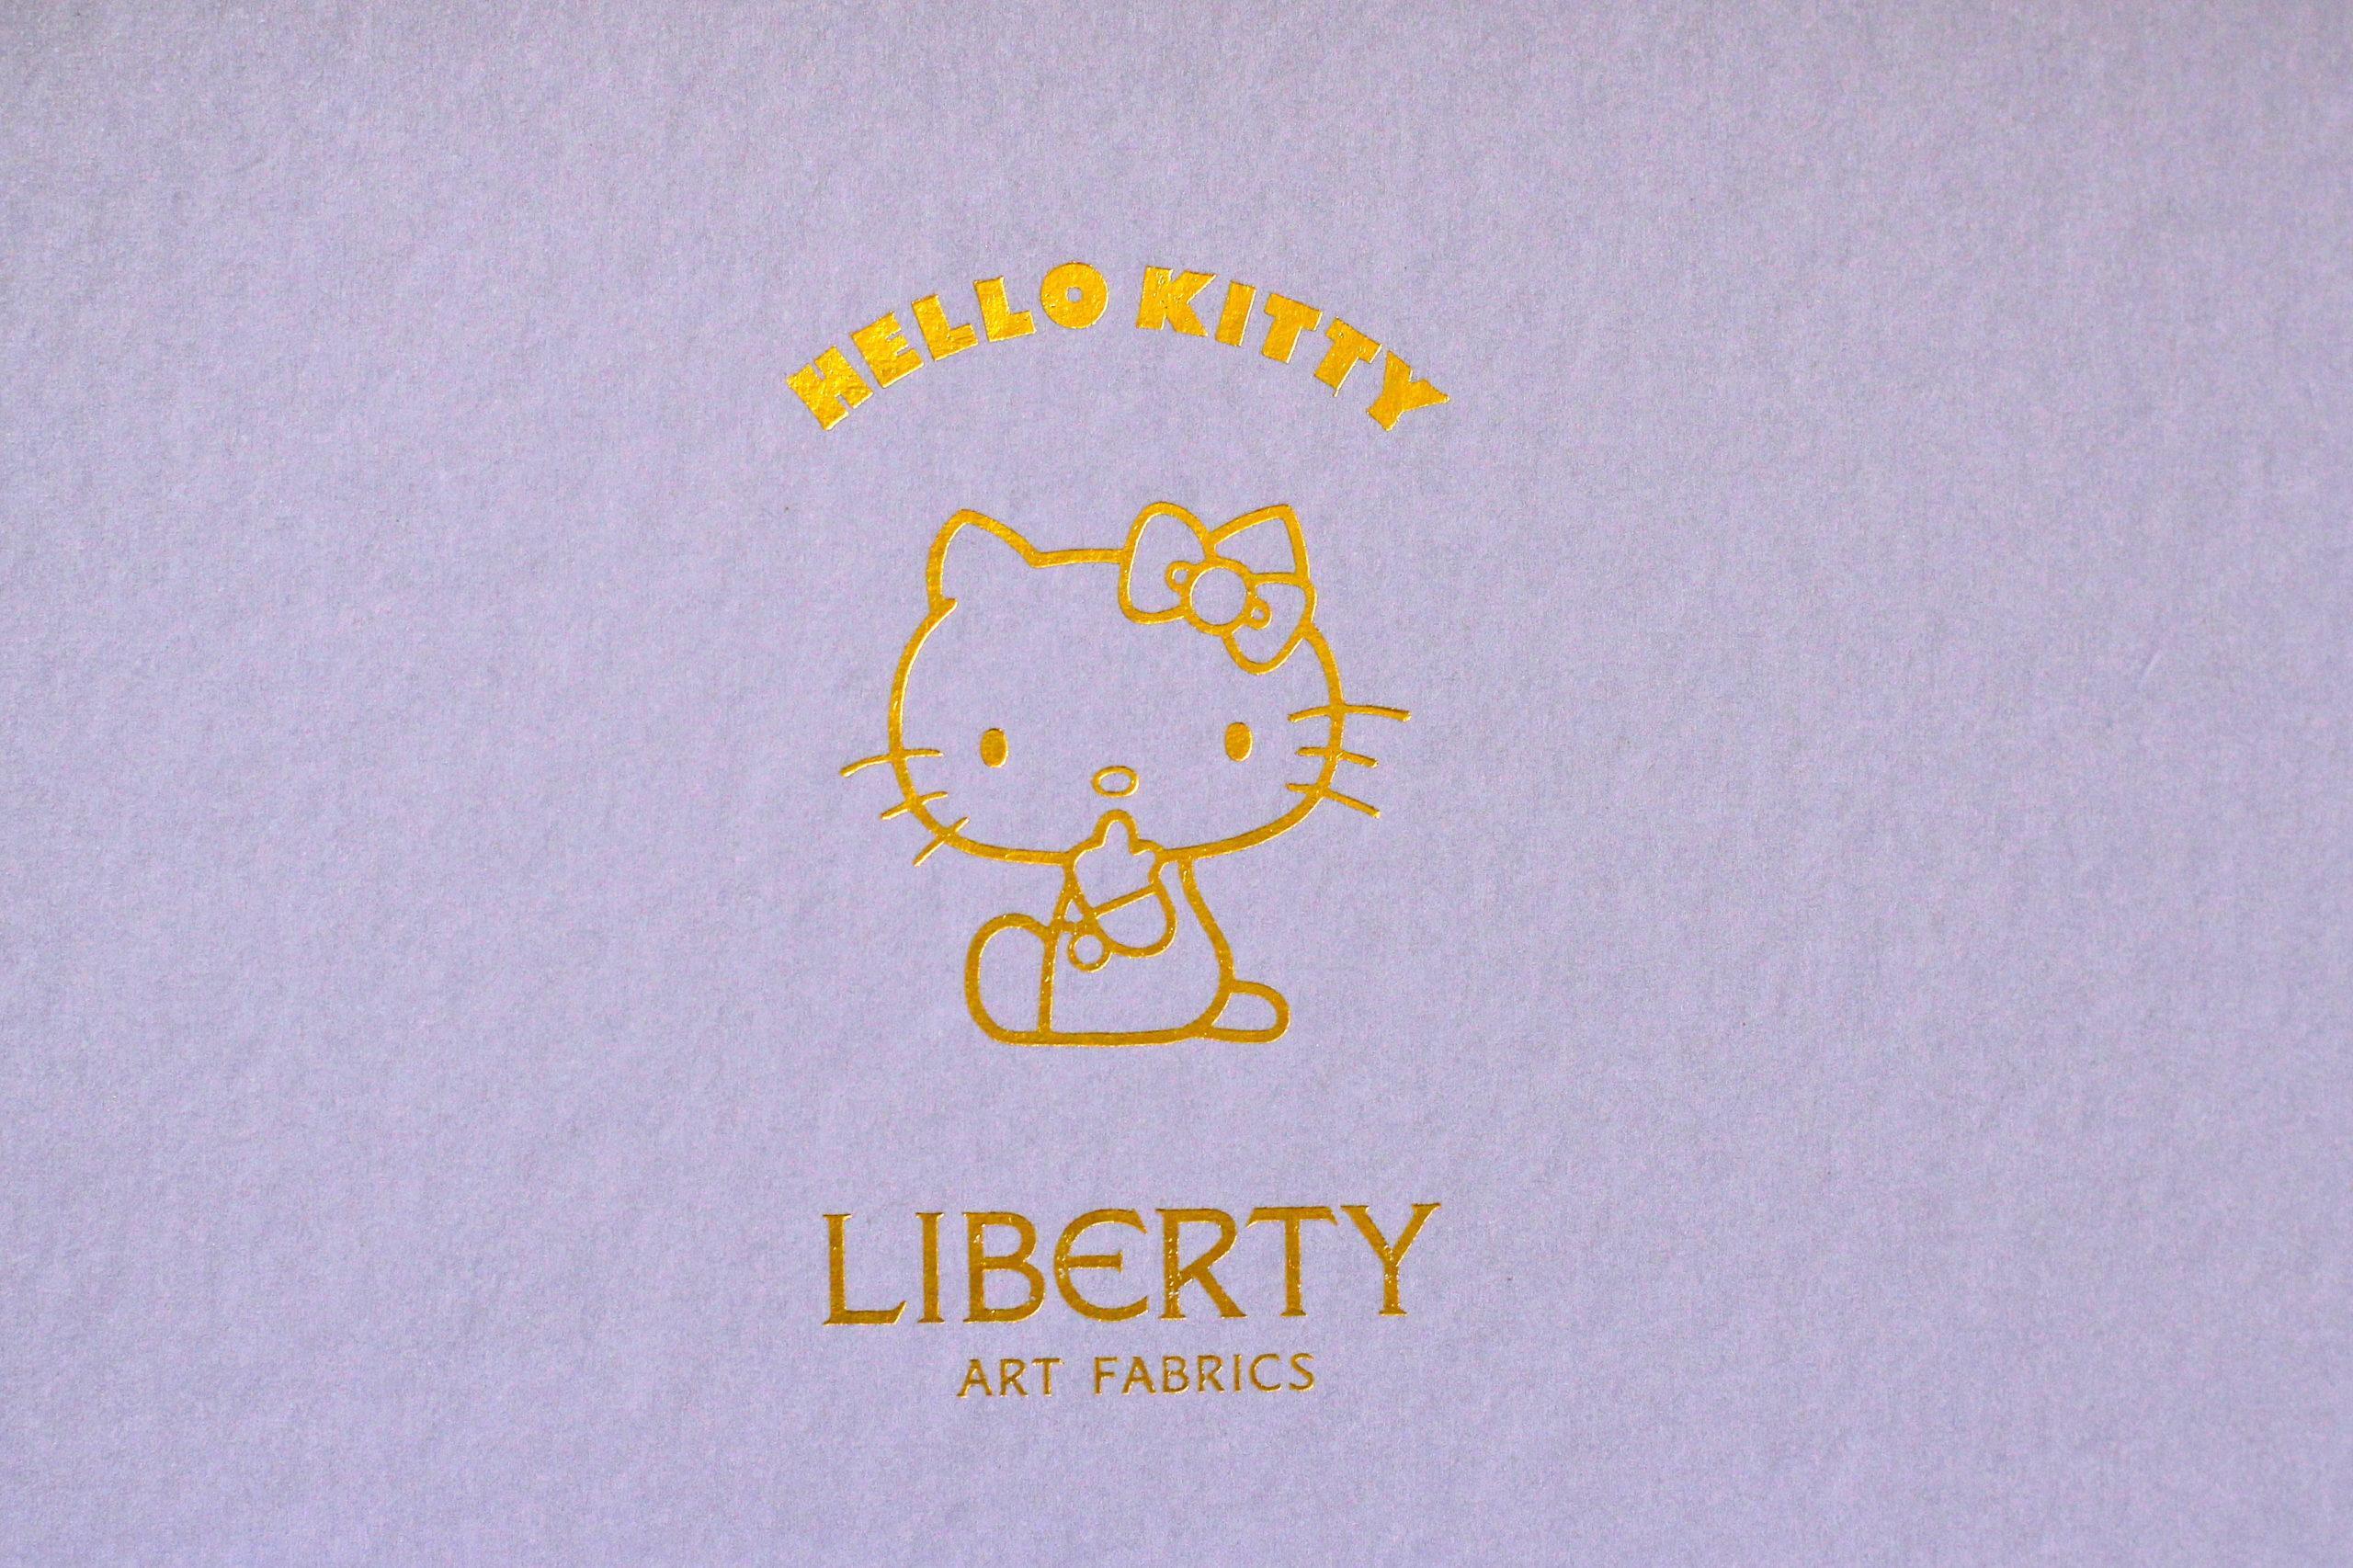 Hello Kitty Liberty case inside